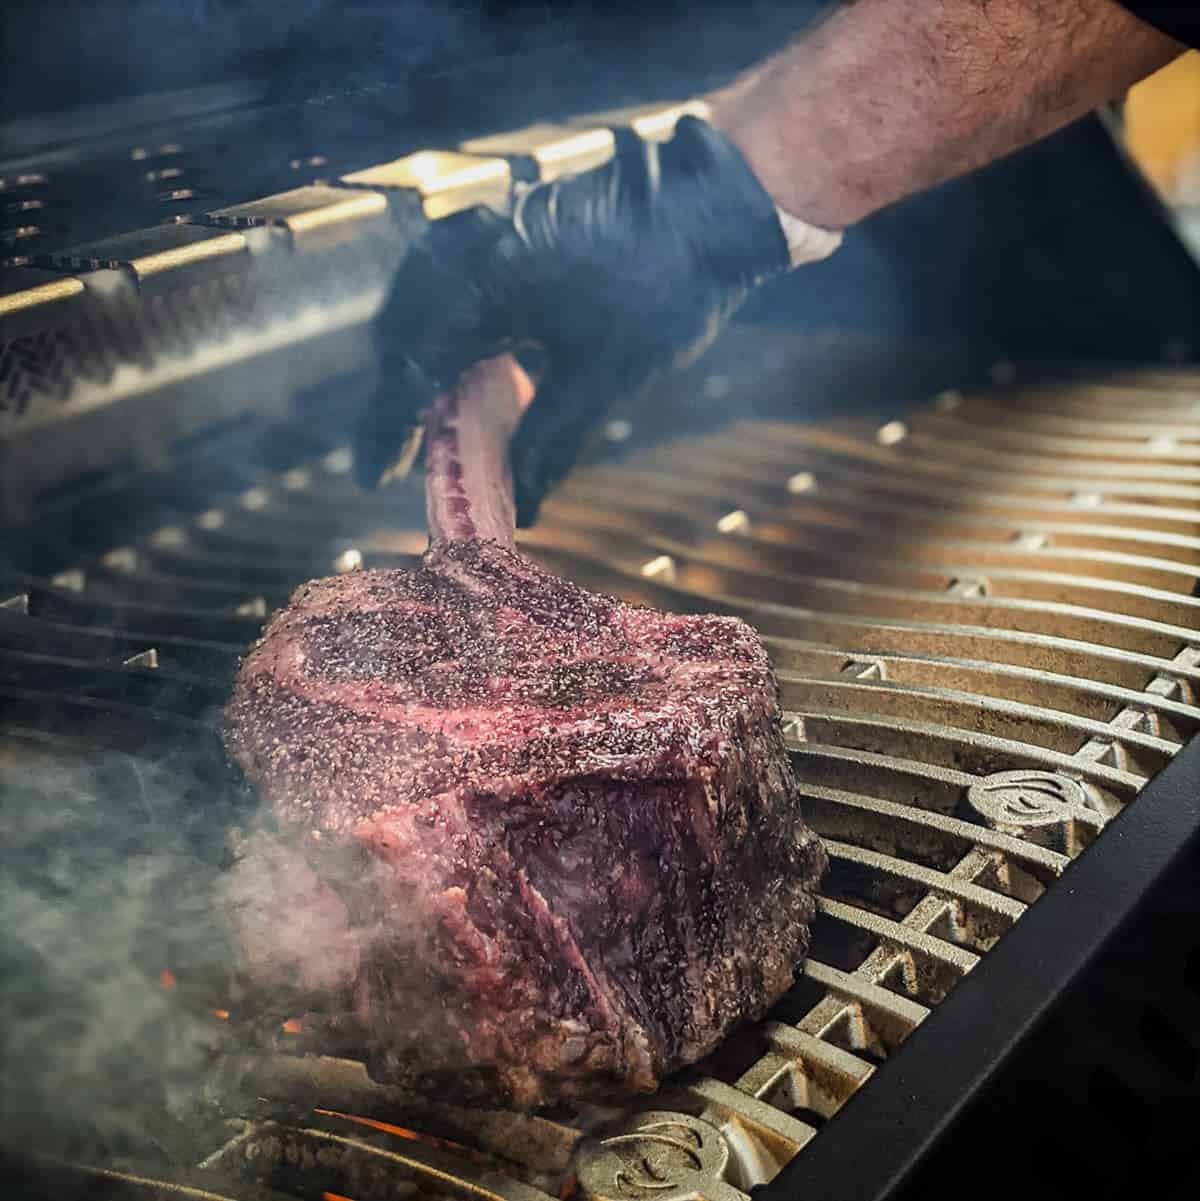 https://bushcooking.com/wp-content/uploads/2021/12/Grilled-Tomahawk-Ribeye-Steak-3a.jpg